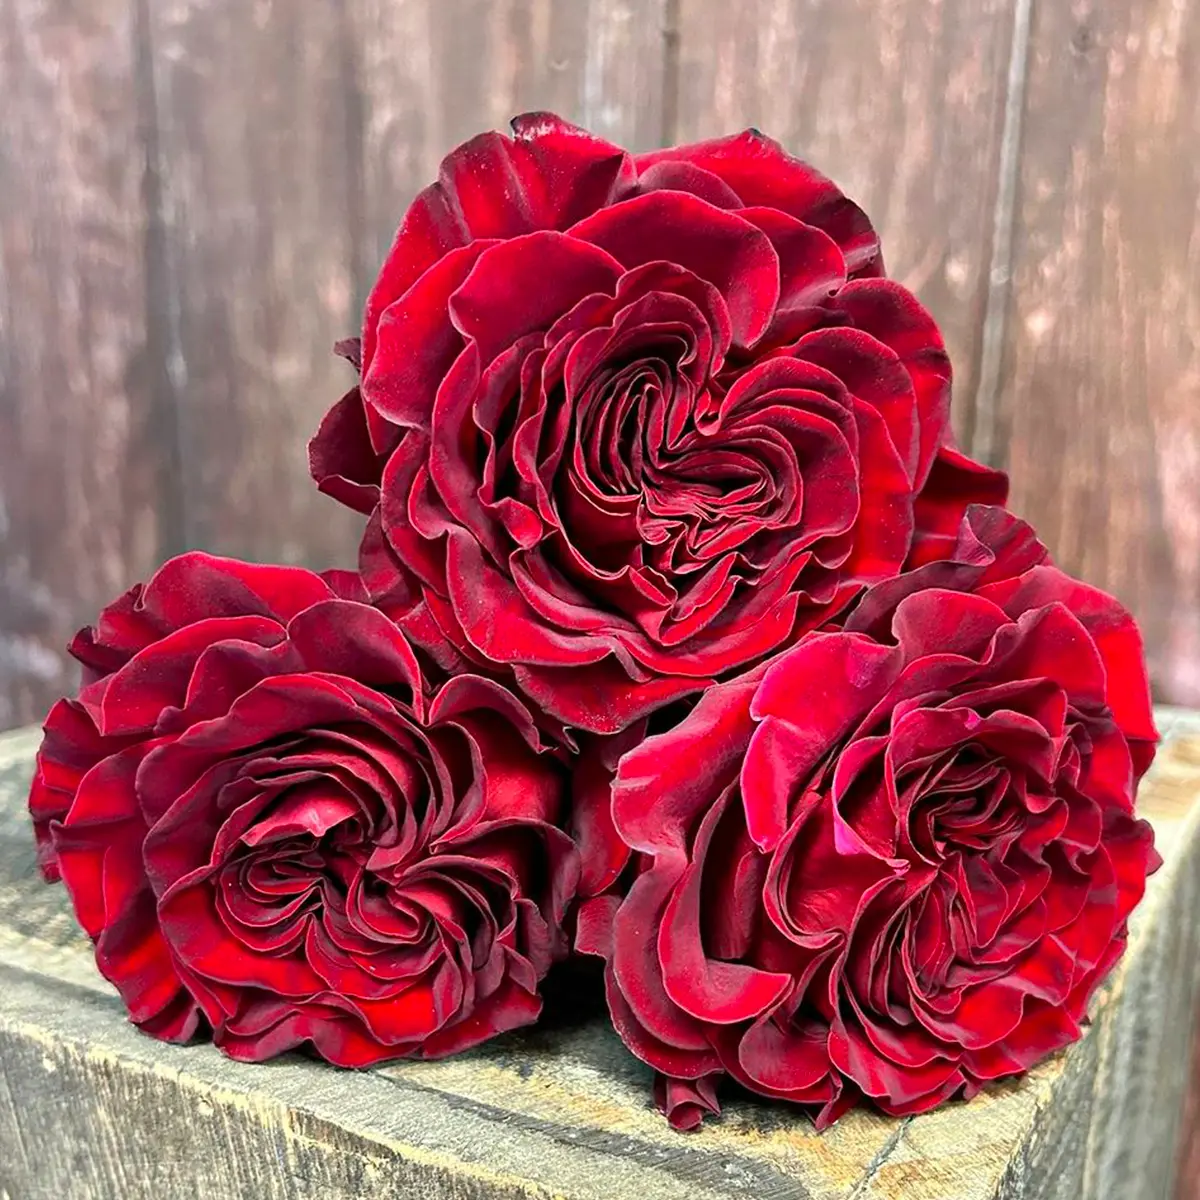 Rose Sunset Hearts cut flower on Thursd feature